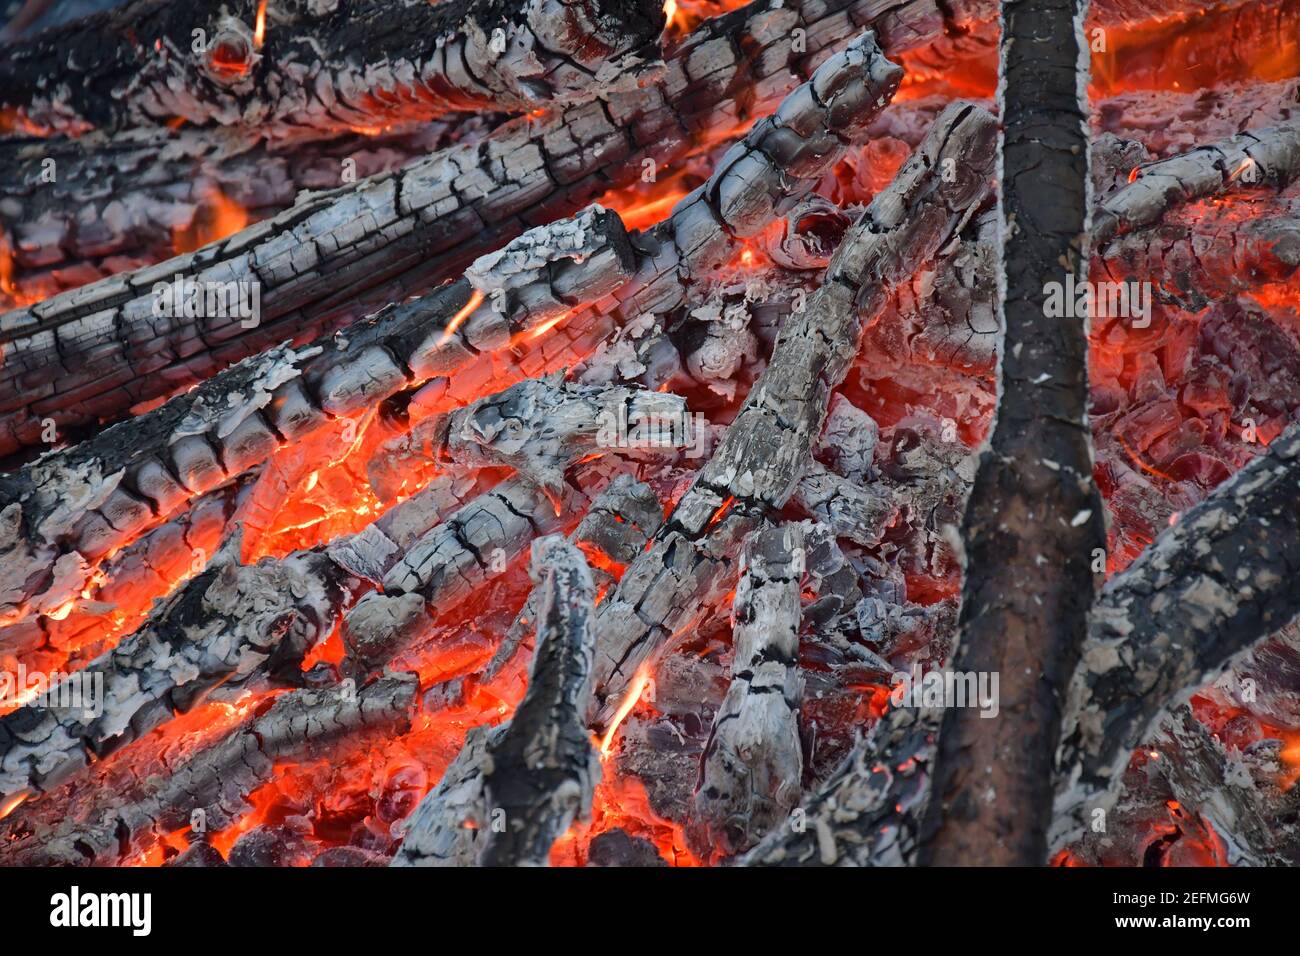 Fire, campfire, heat, burning firewood Stock Photo